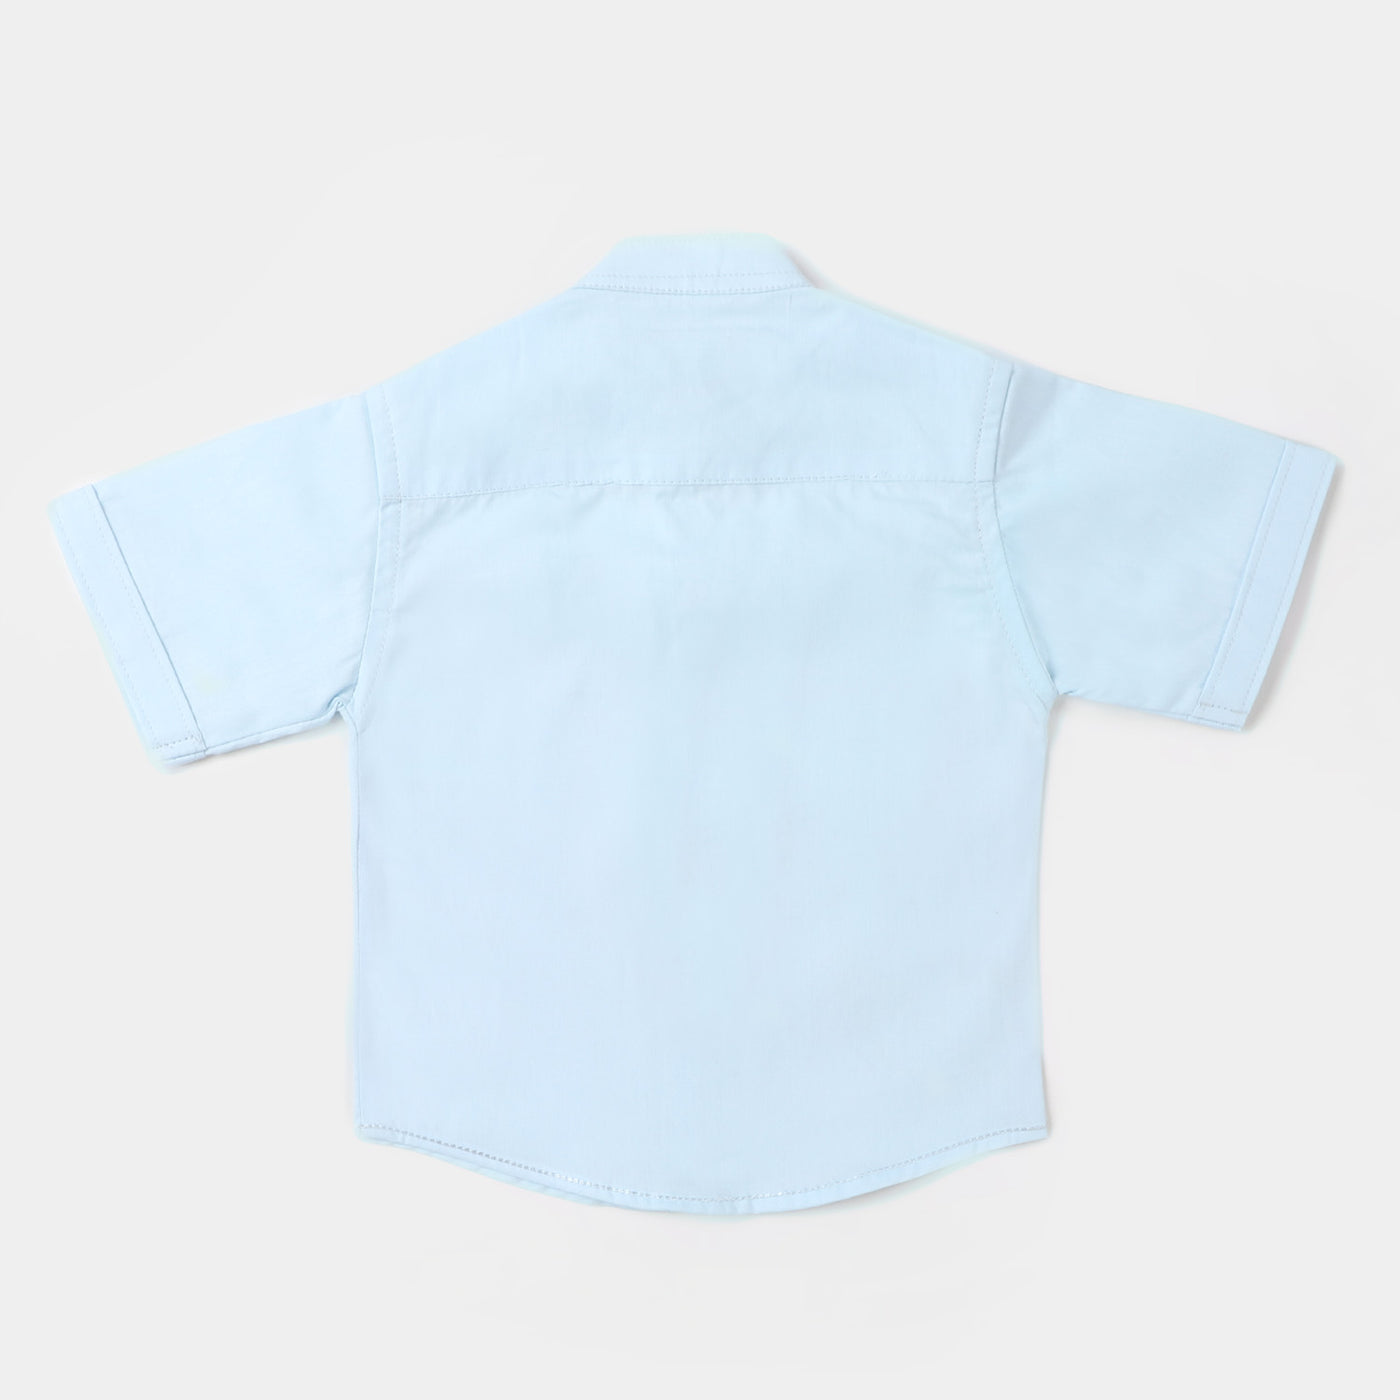 Infant Boys Cotton Casual Shirt Fun Saurus - SKY BLUE